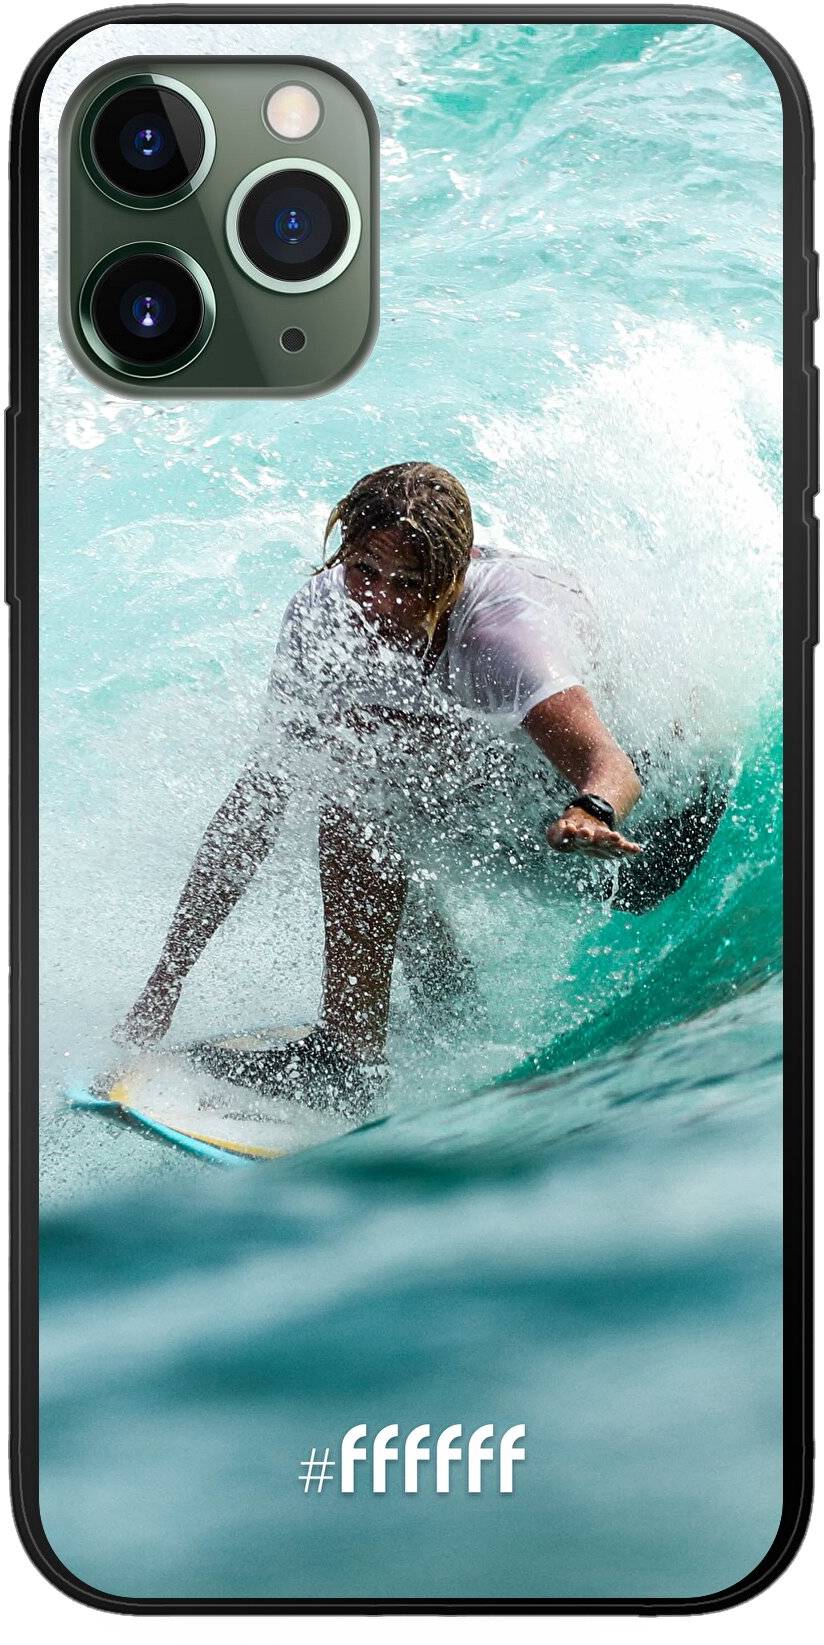 Boy Surfing iPhone 11 Pro